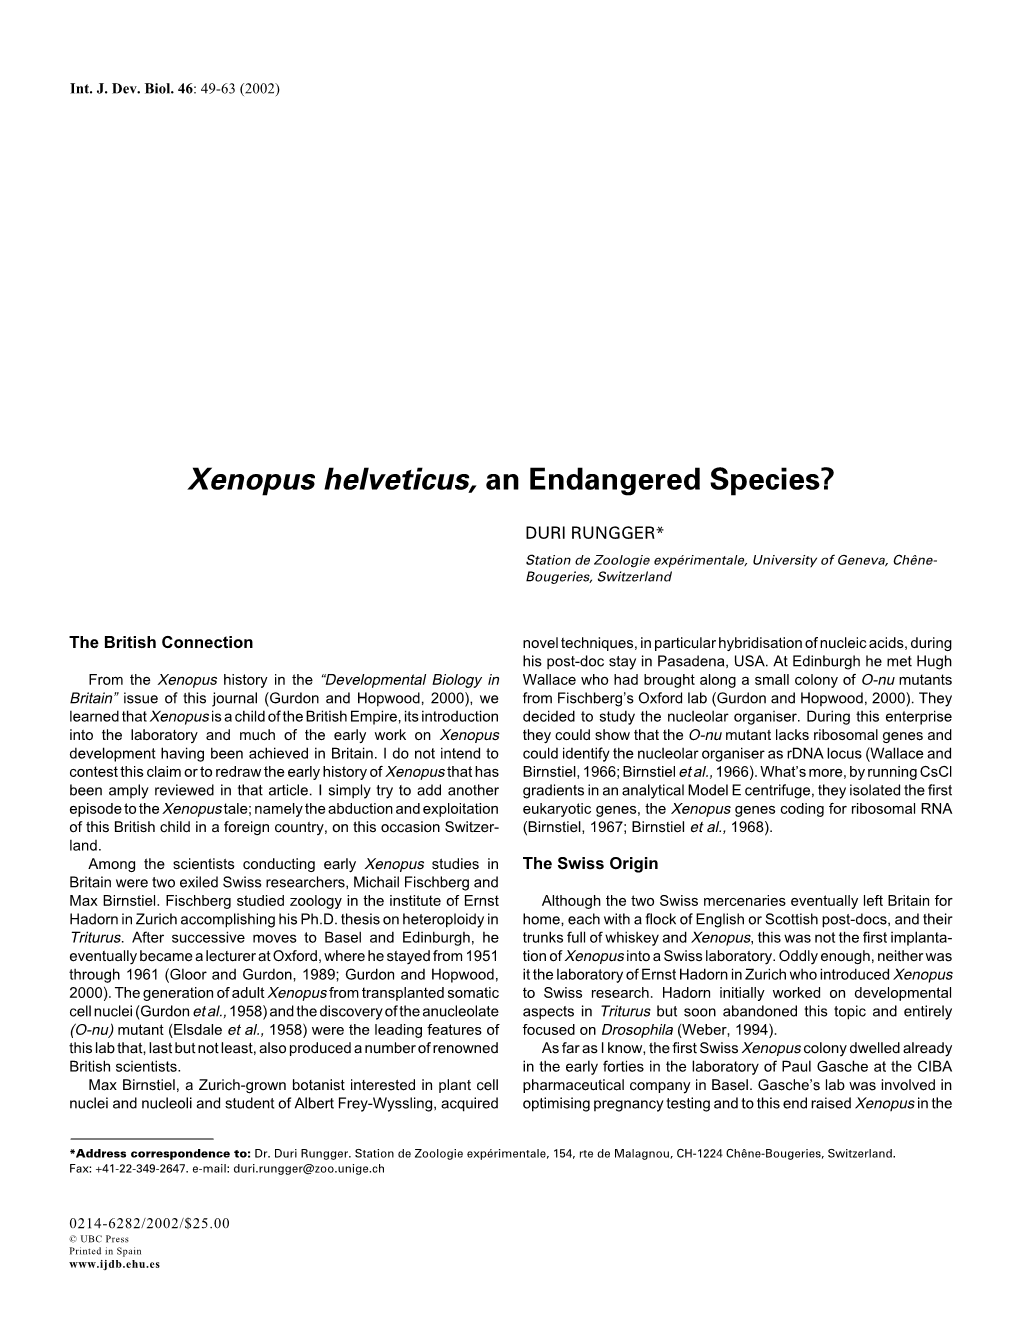 Xenopus Helveticus, an Endangered Species?